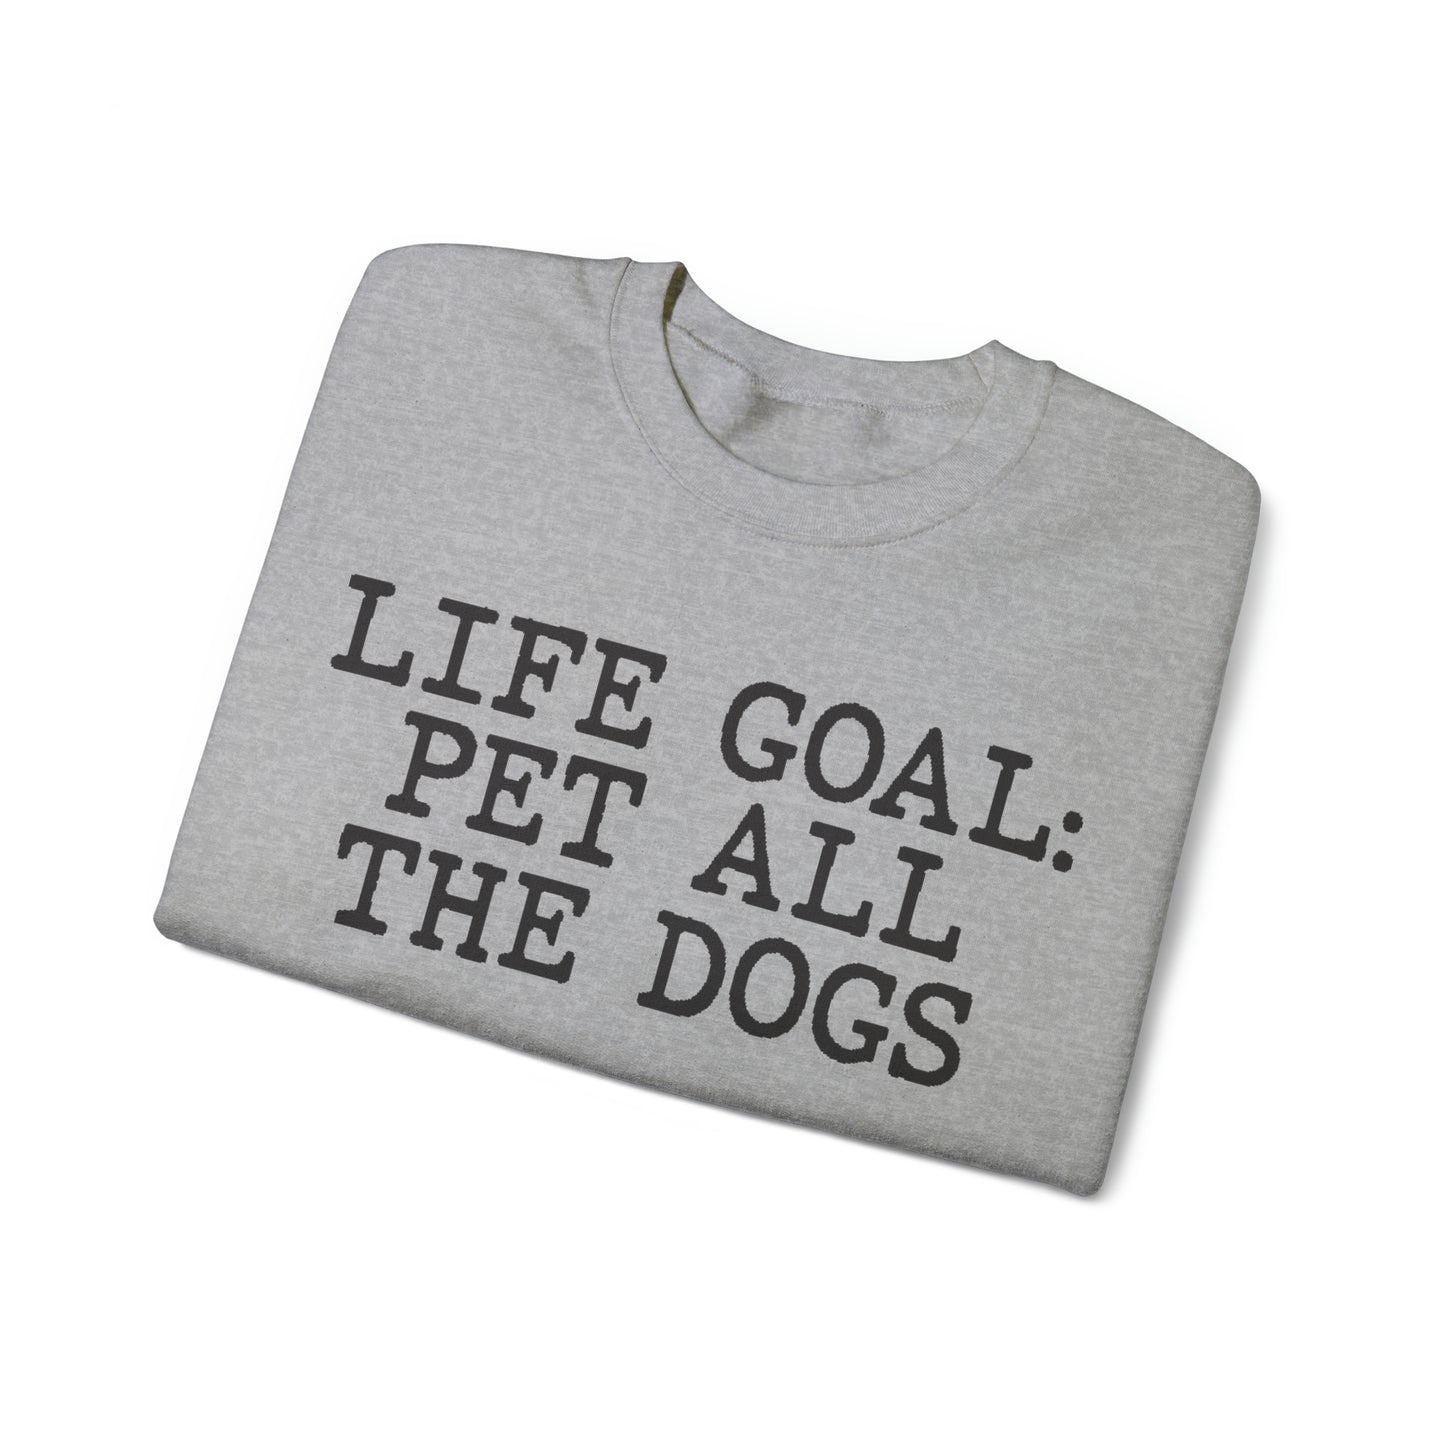 Life Goal Pet All The Dogs Sweatshirt